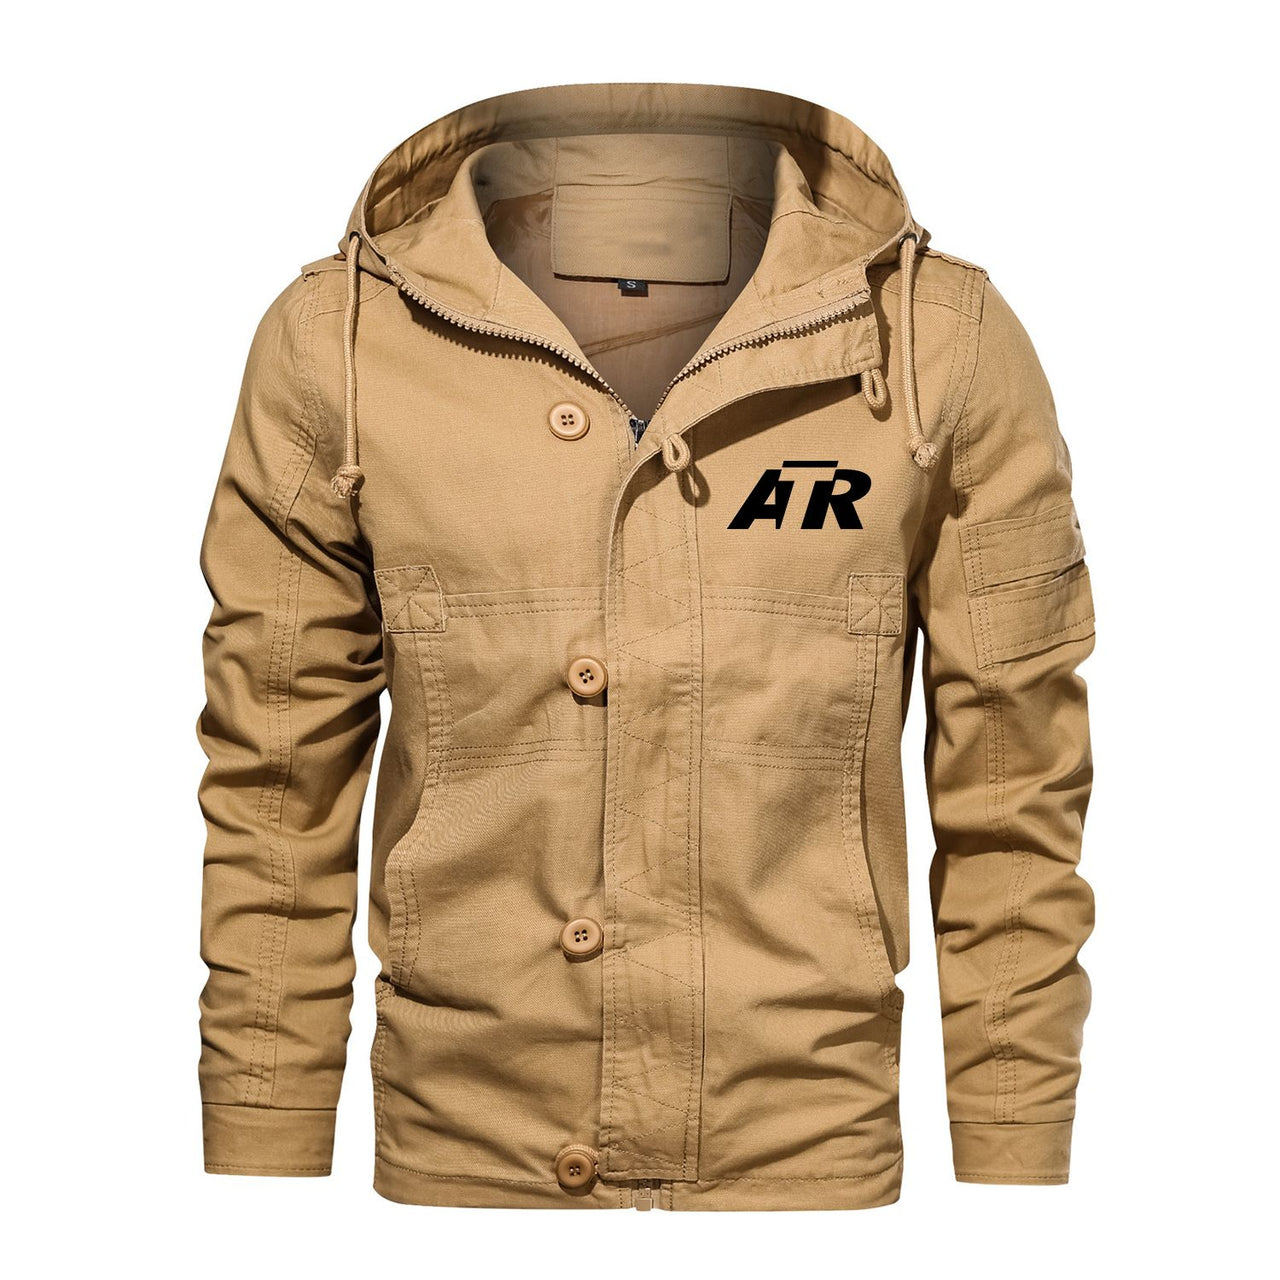 ATR & Text Designed Cotton Jackets